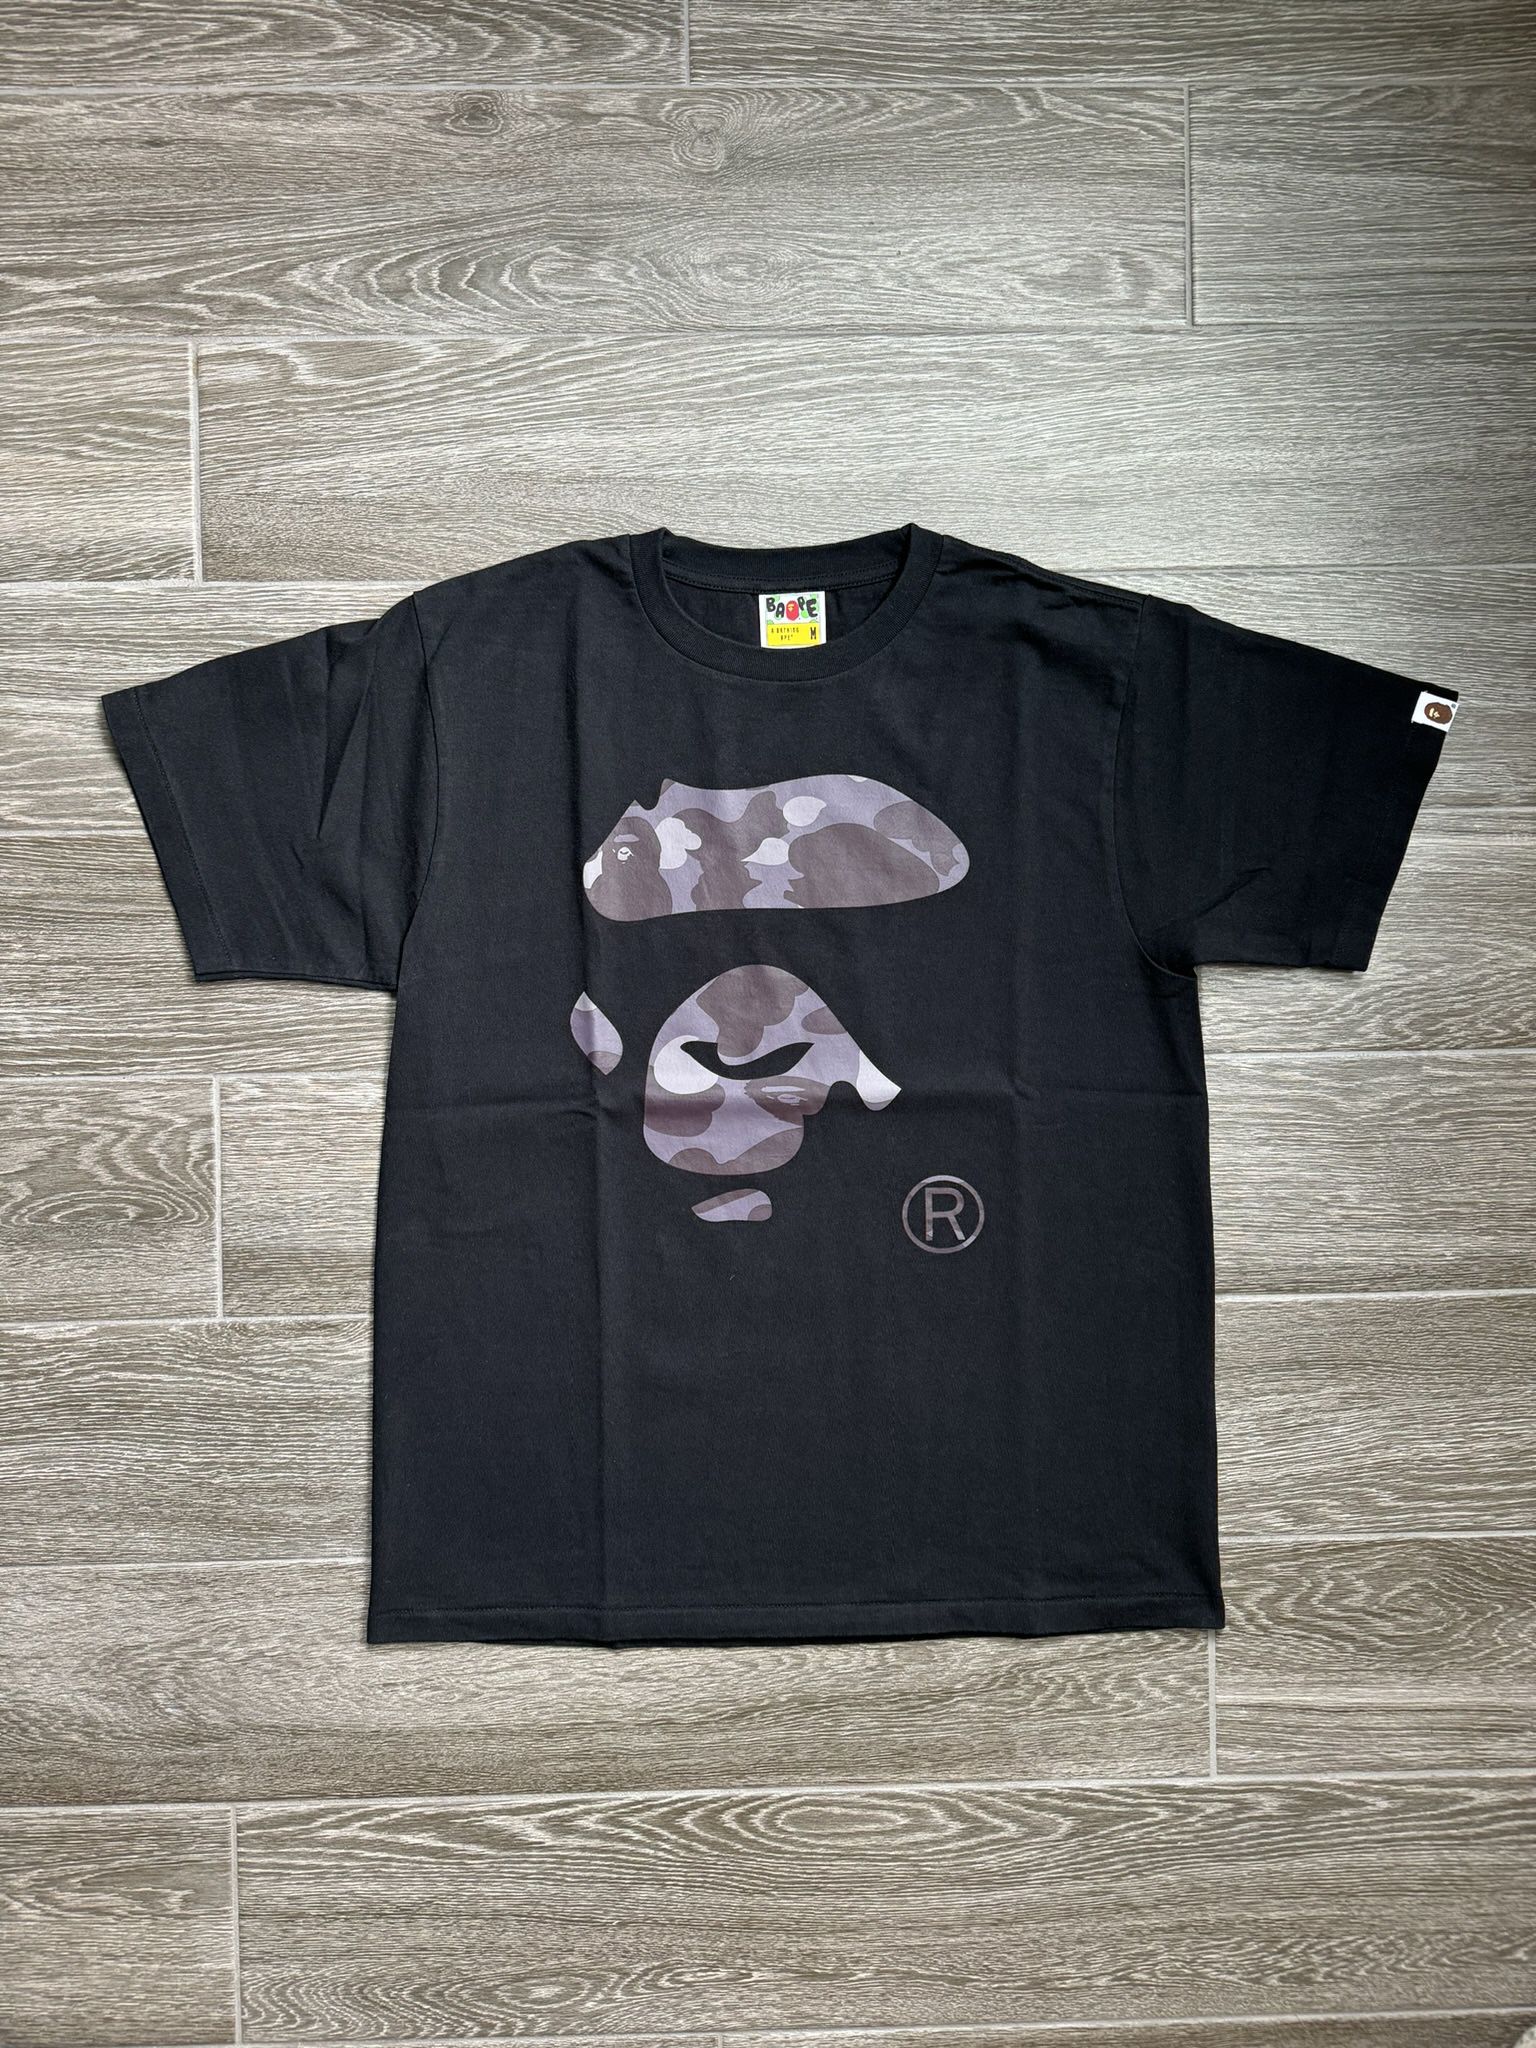 Bape ape face T-shirt